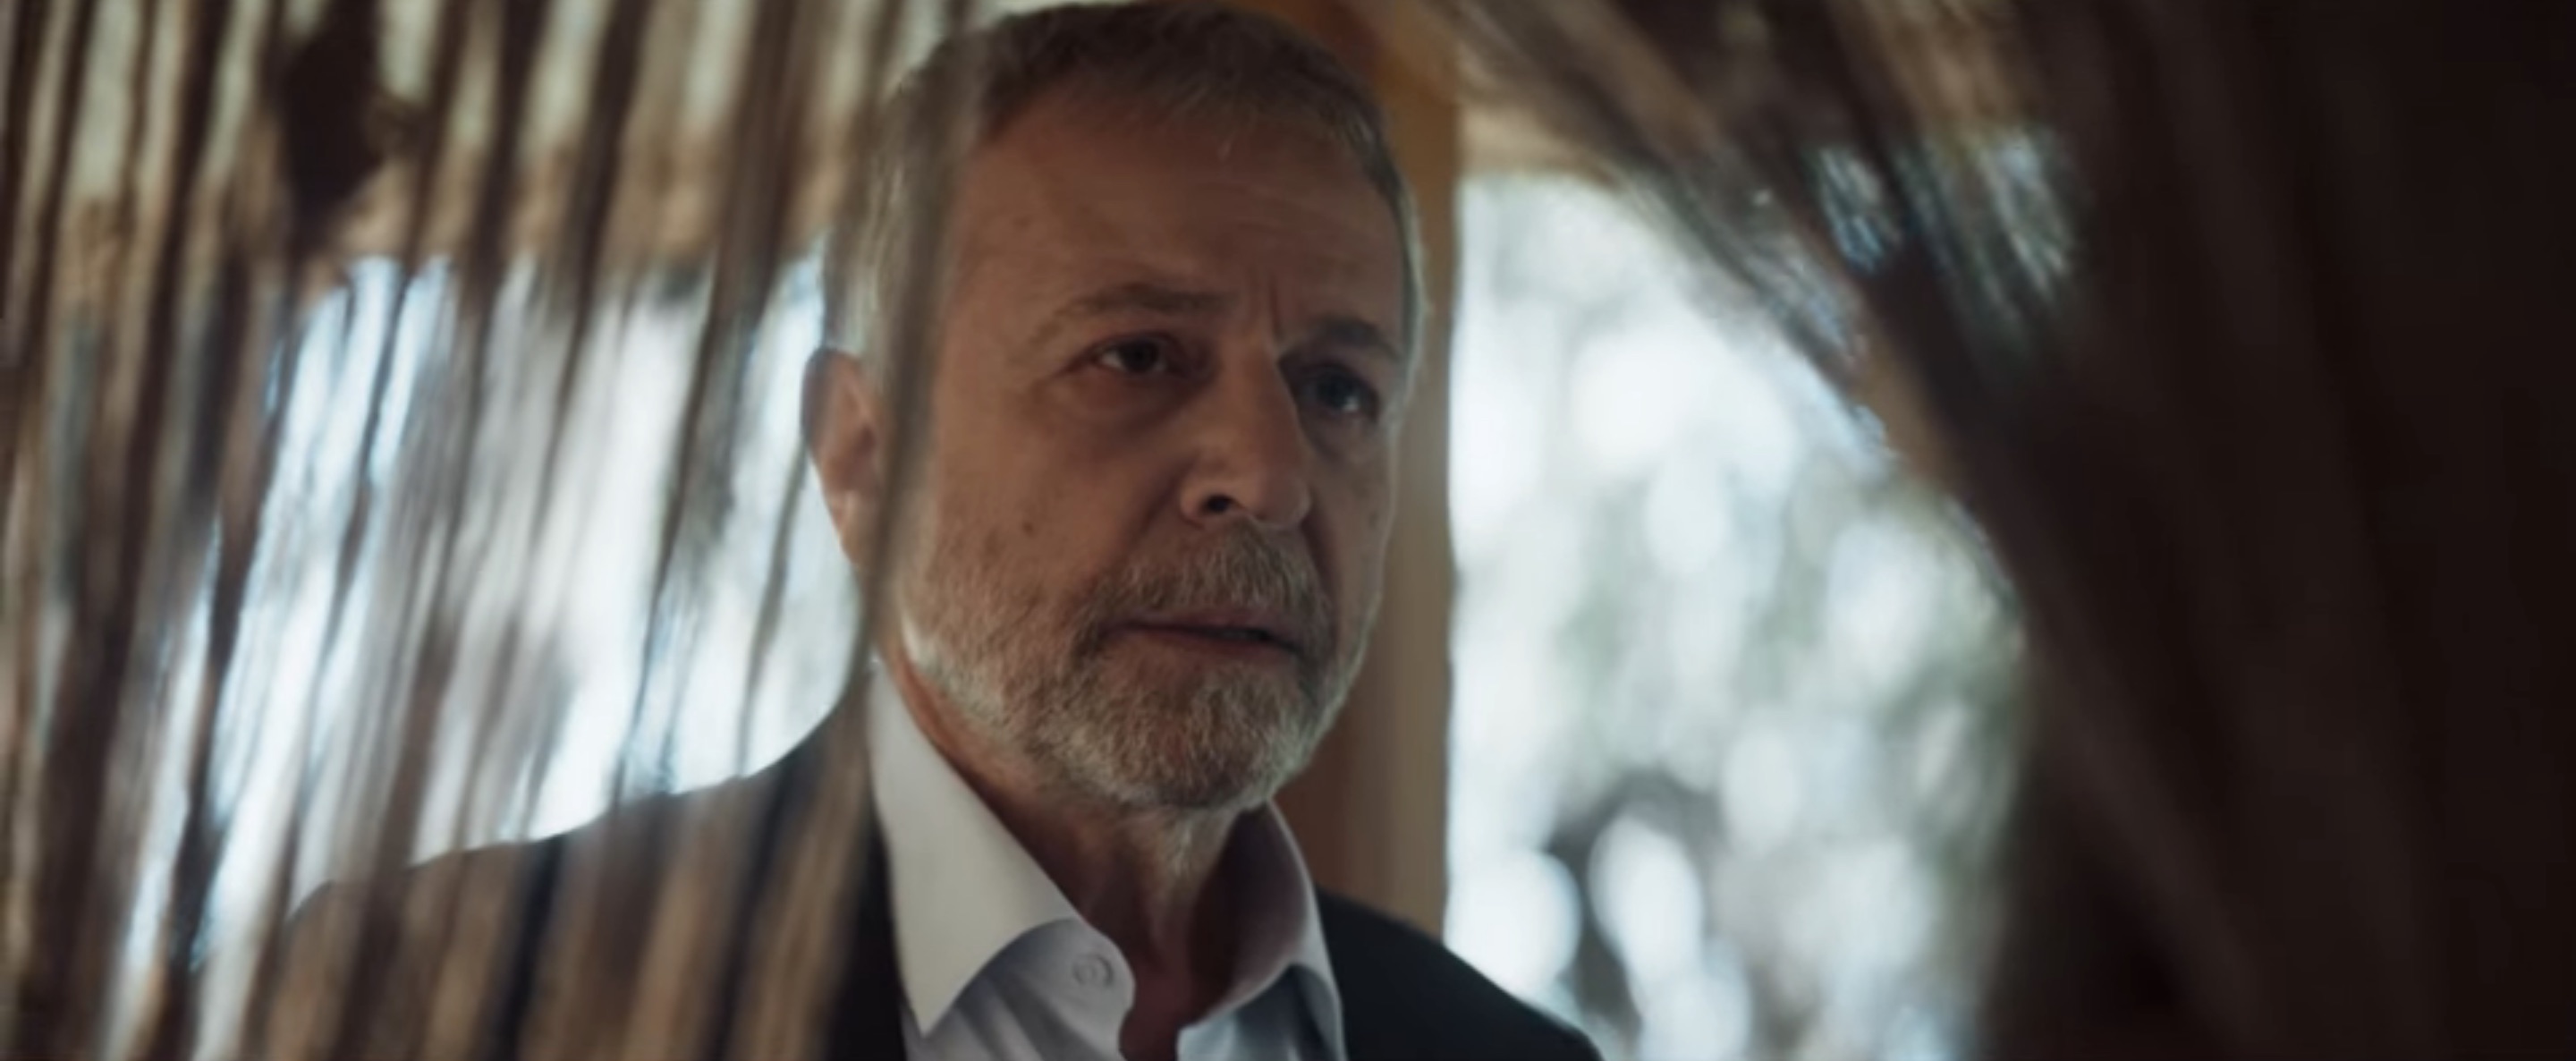 Doom of Love Cast on Netflix - Musa Uzunlar as Behçet